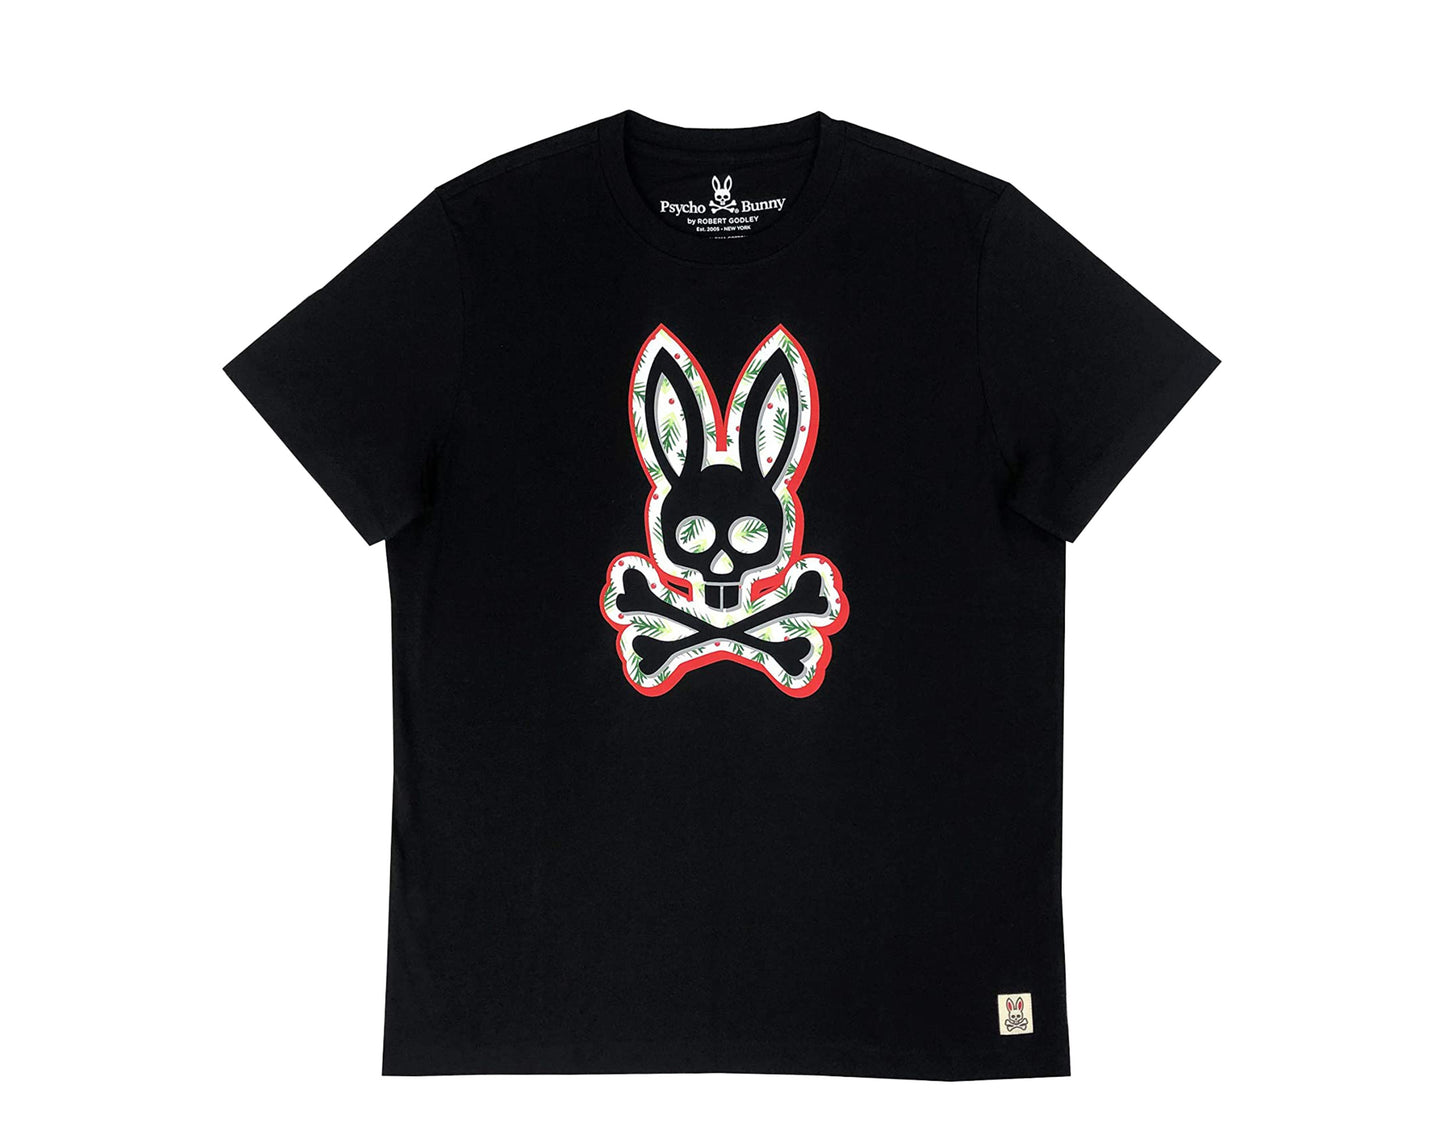 Psycho Bunny Dalton Graphic Men's Tee Shirt